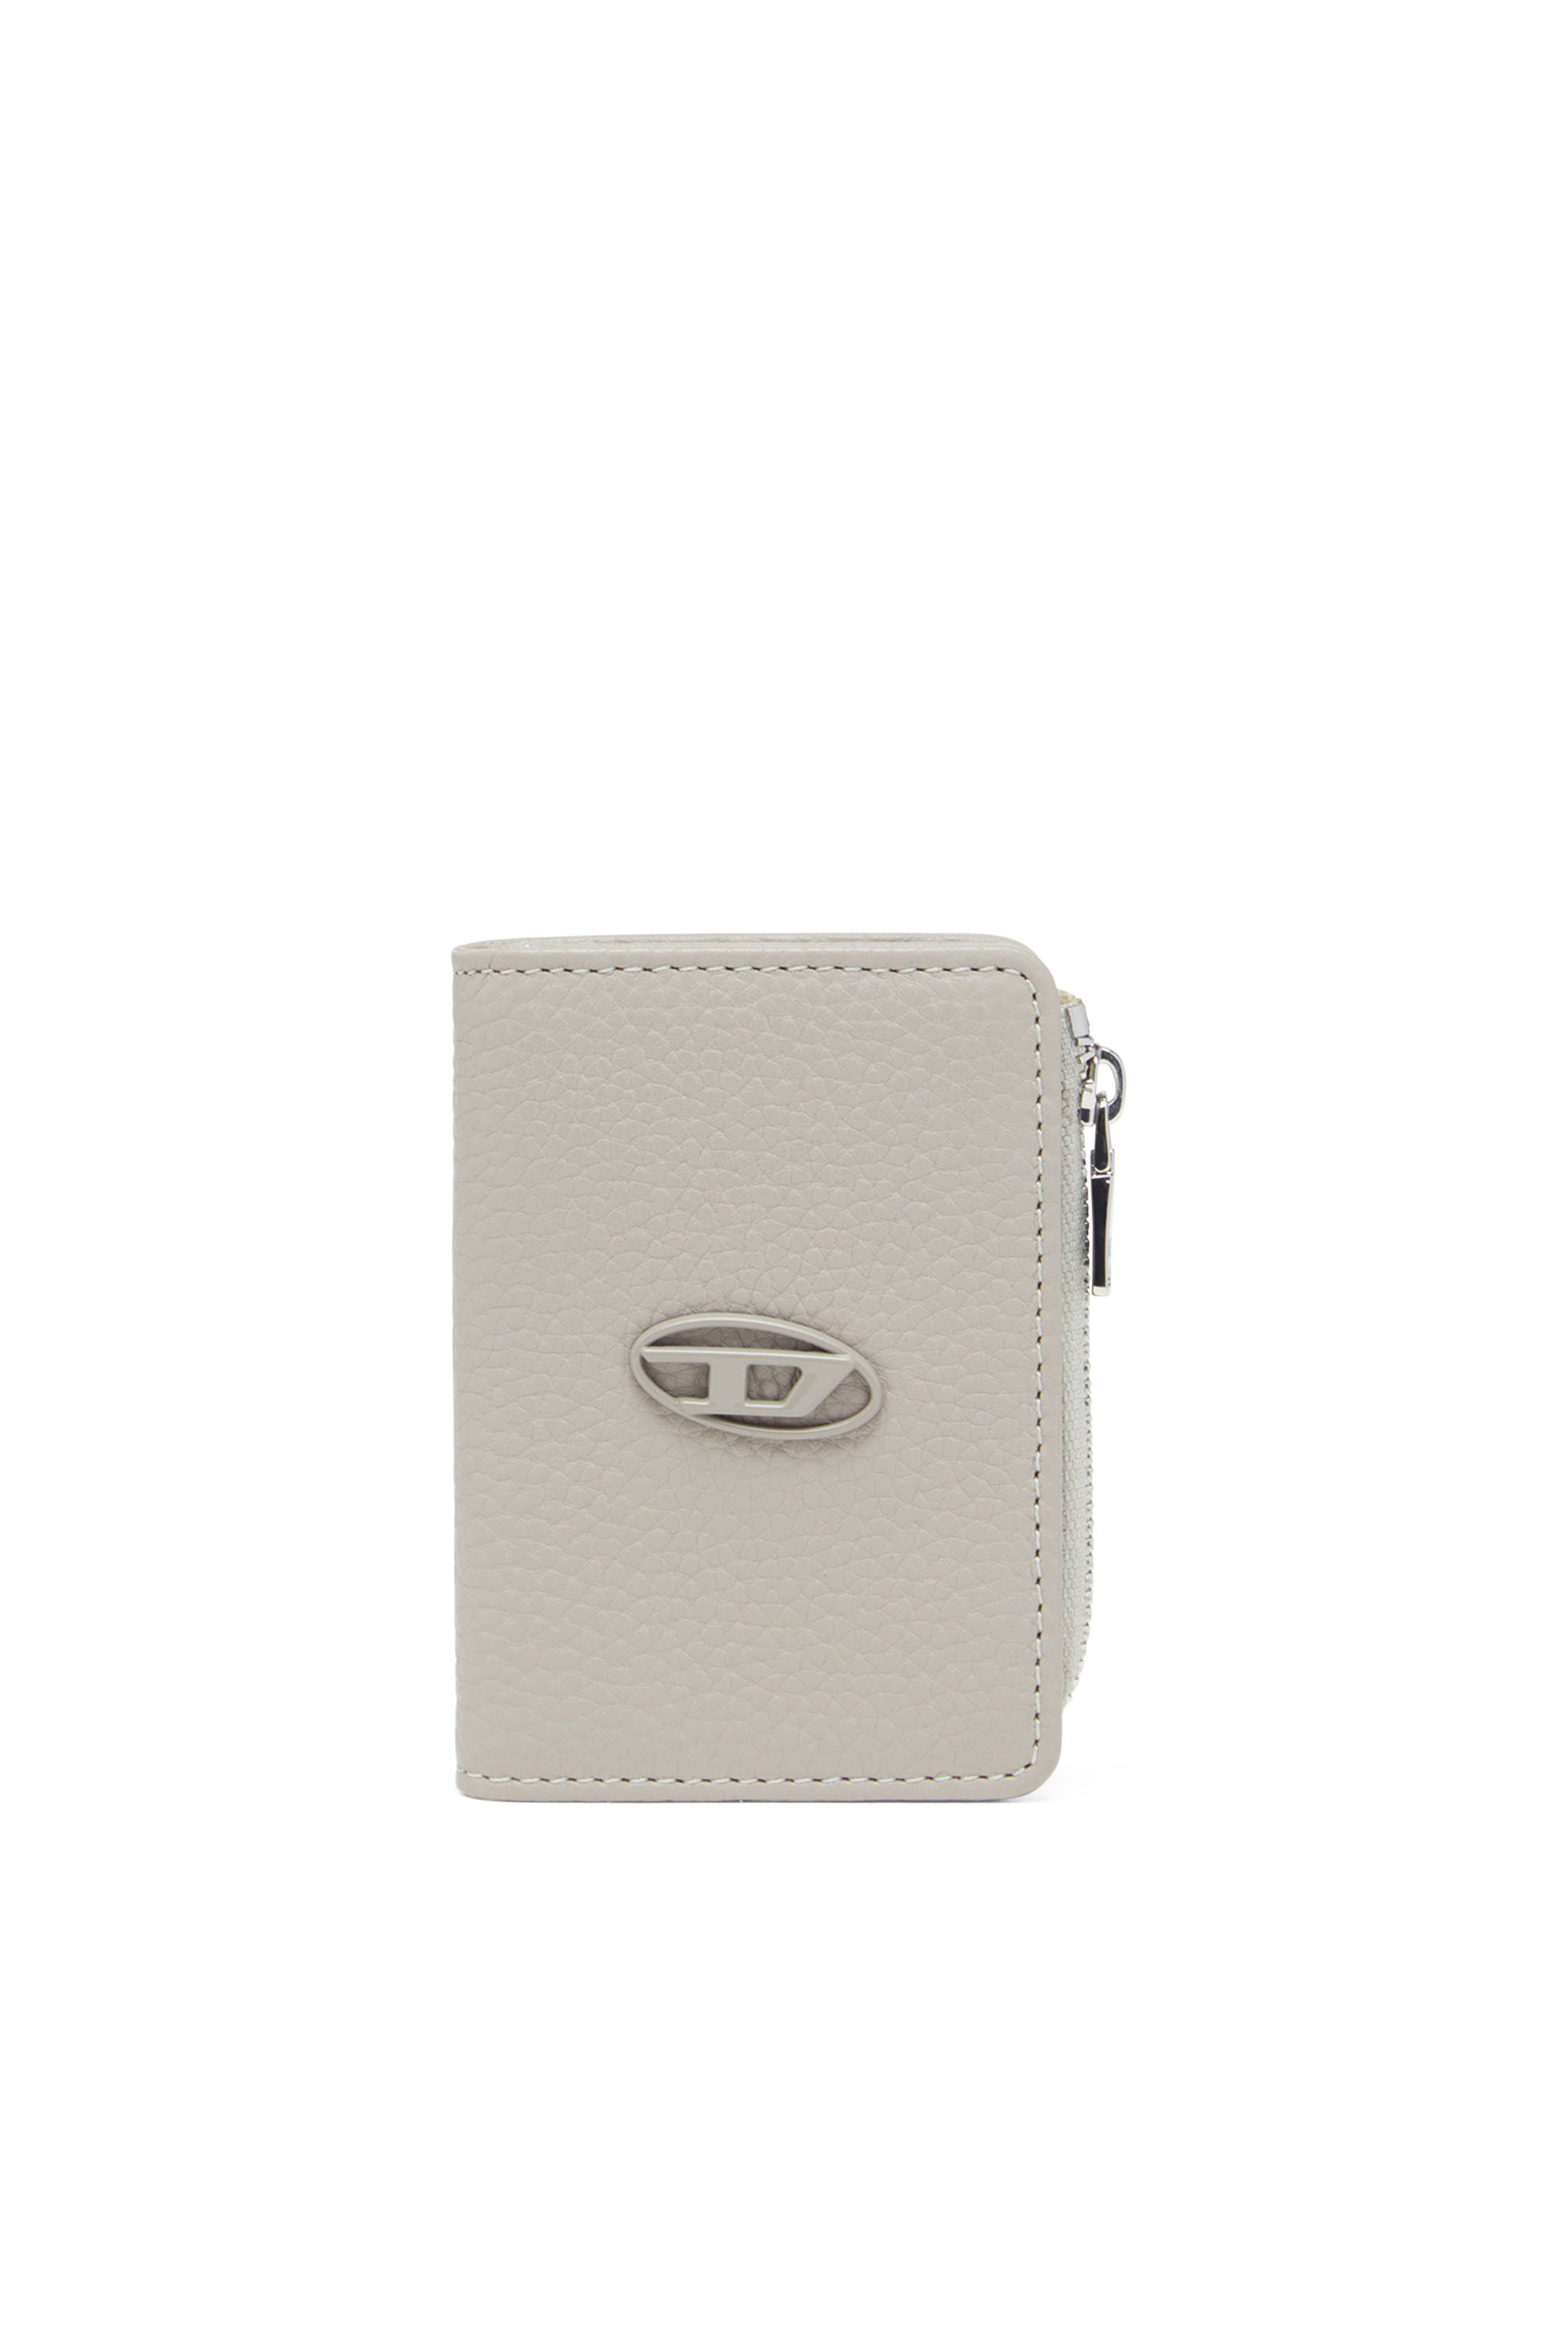 Diesel - HISSU EVO CARD HOLDER L, Male Leather card holder in グレー - Image 1